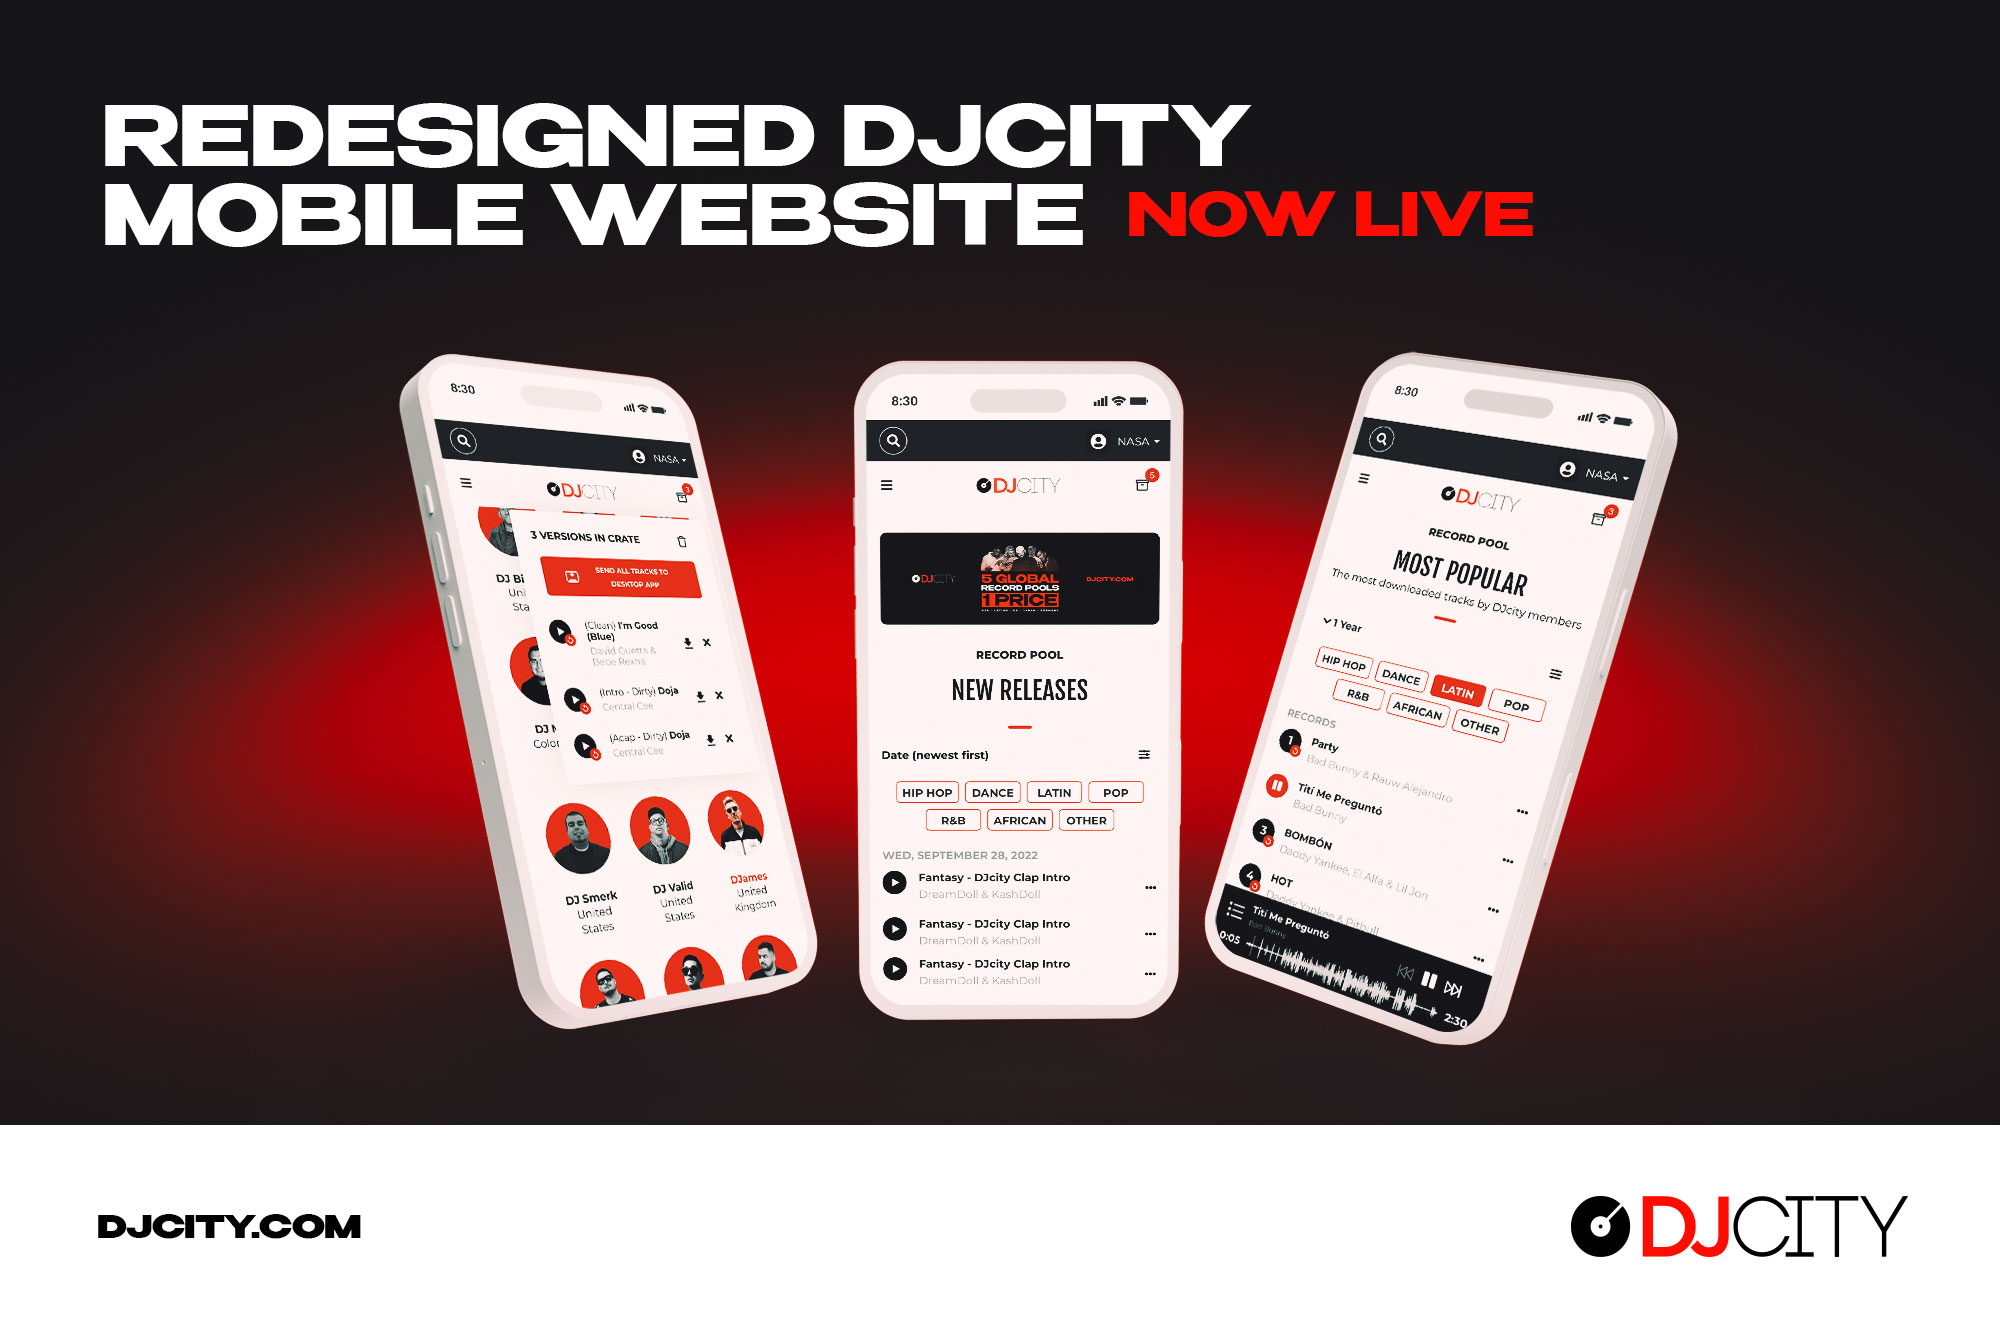 Redesigned DJcity Mobile Website Now Live